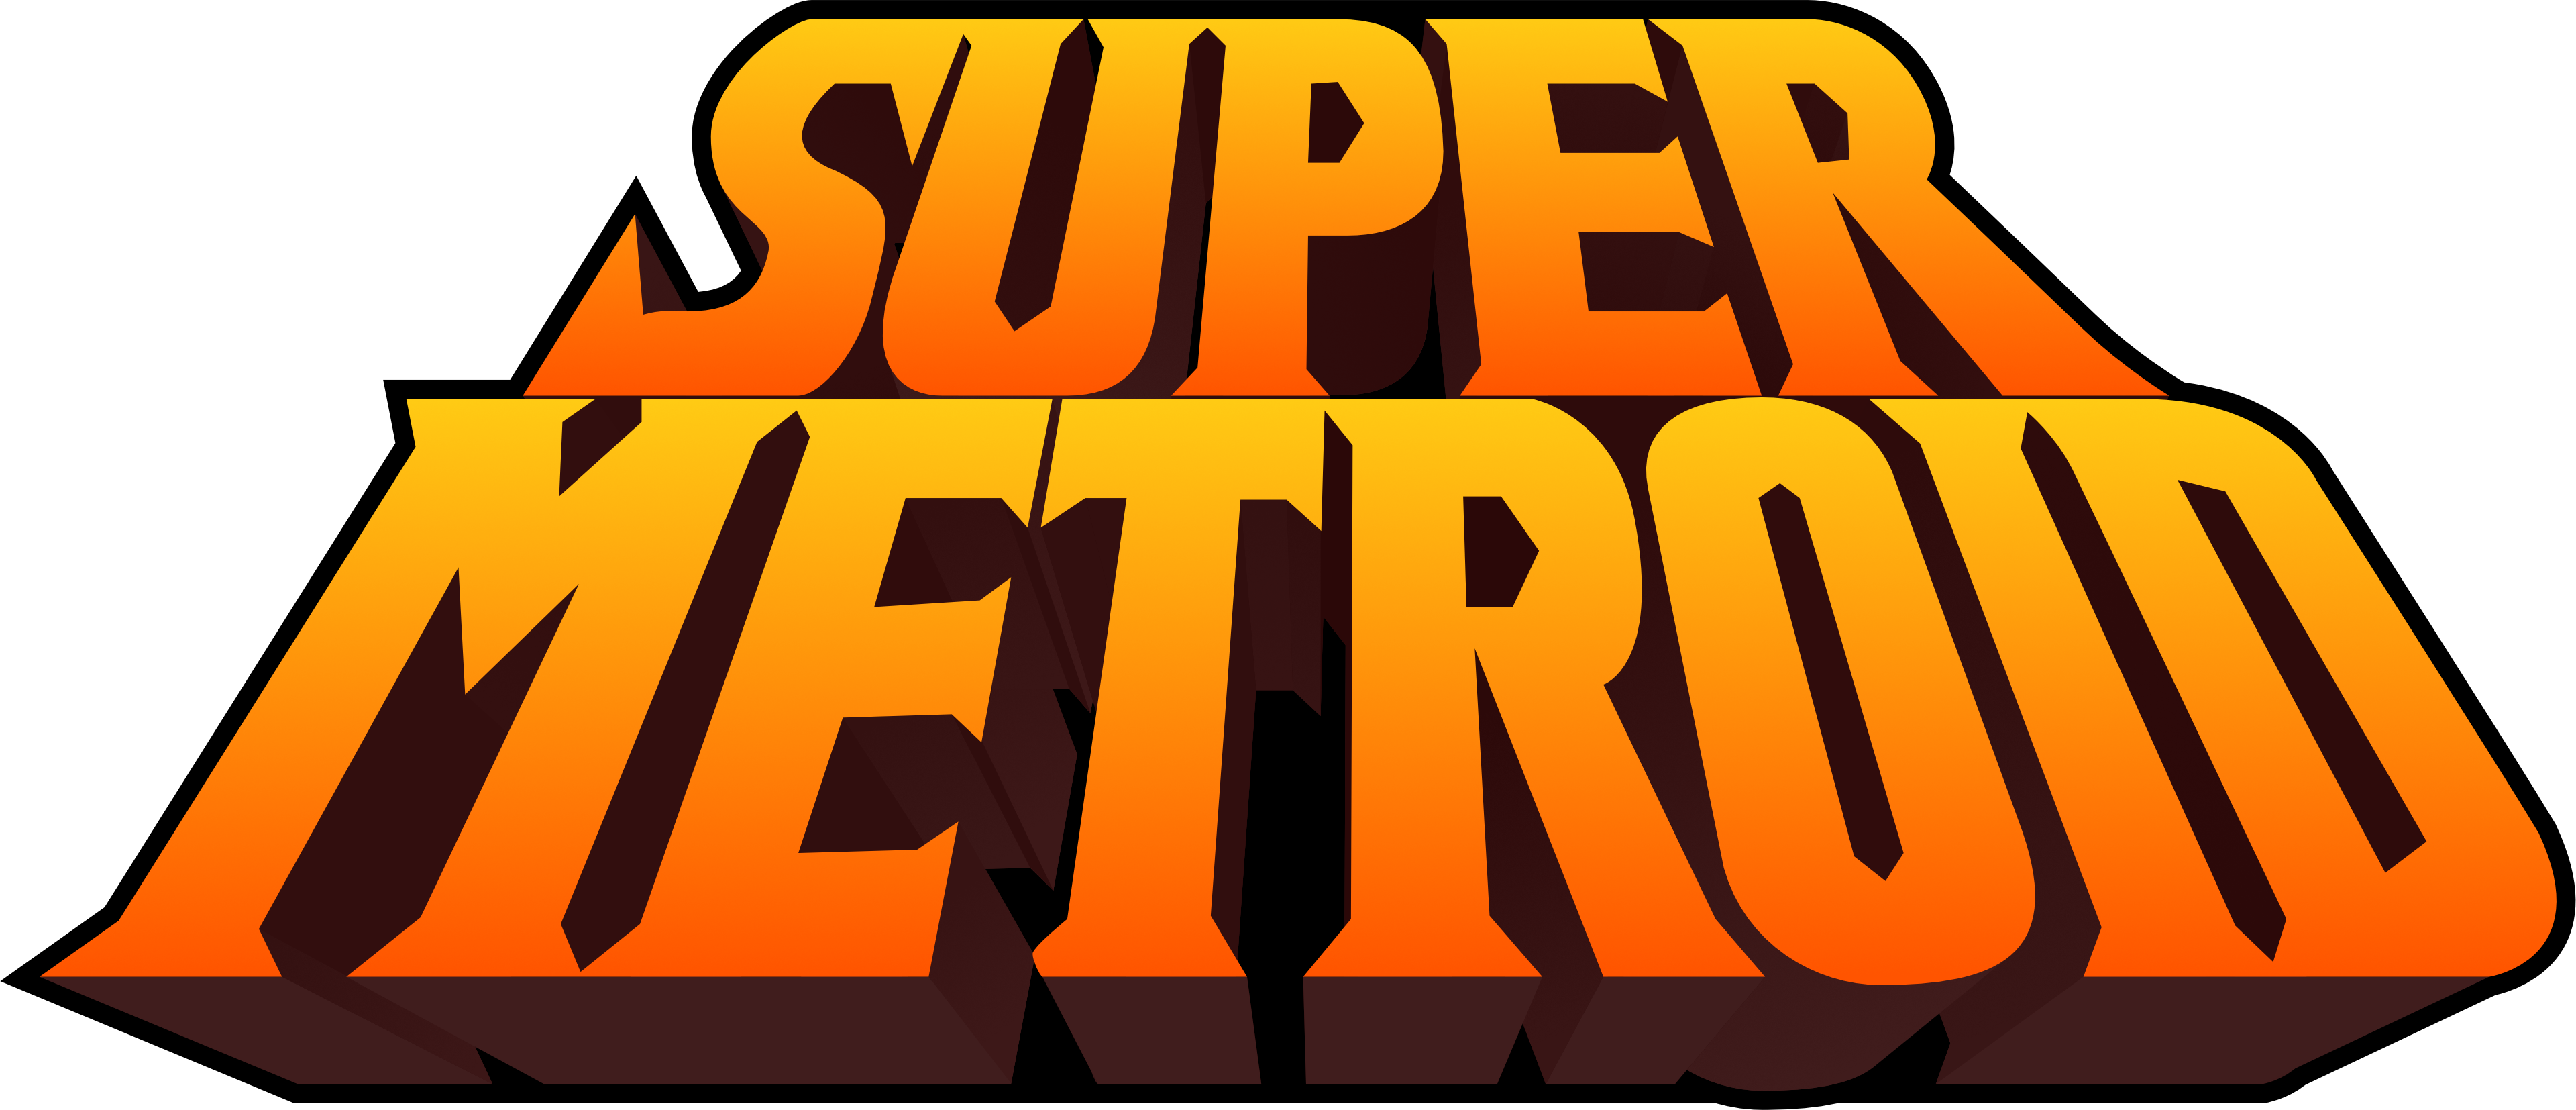 super metroid logo